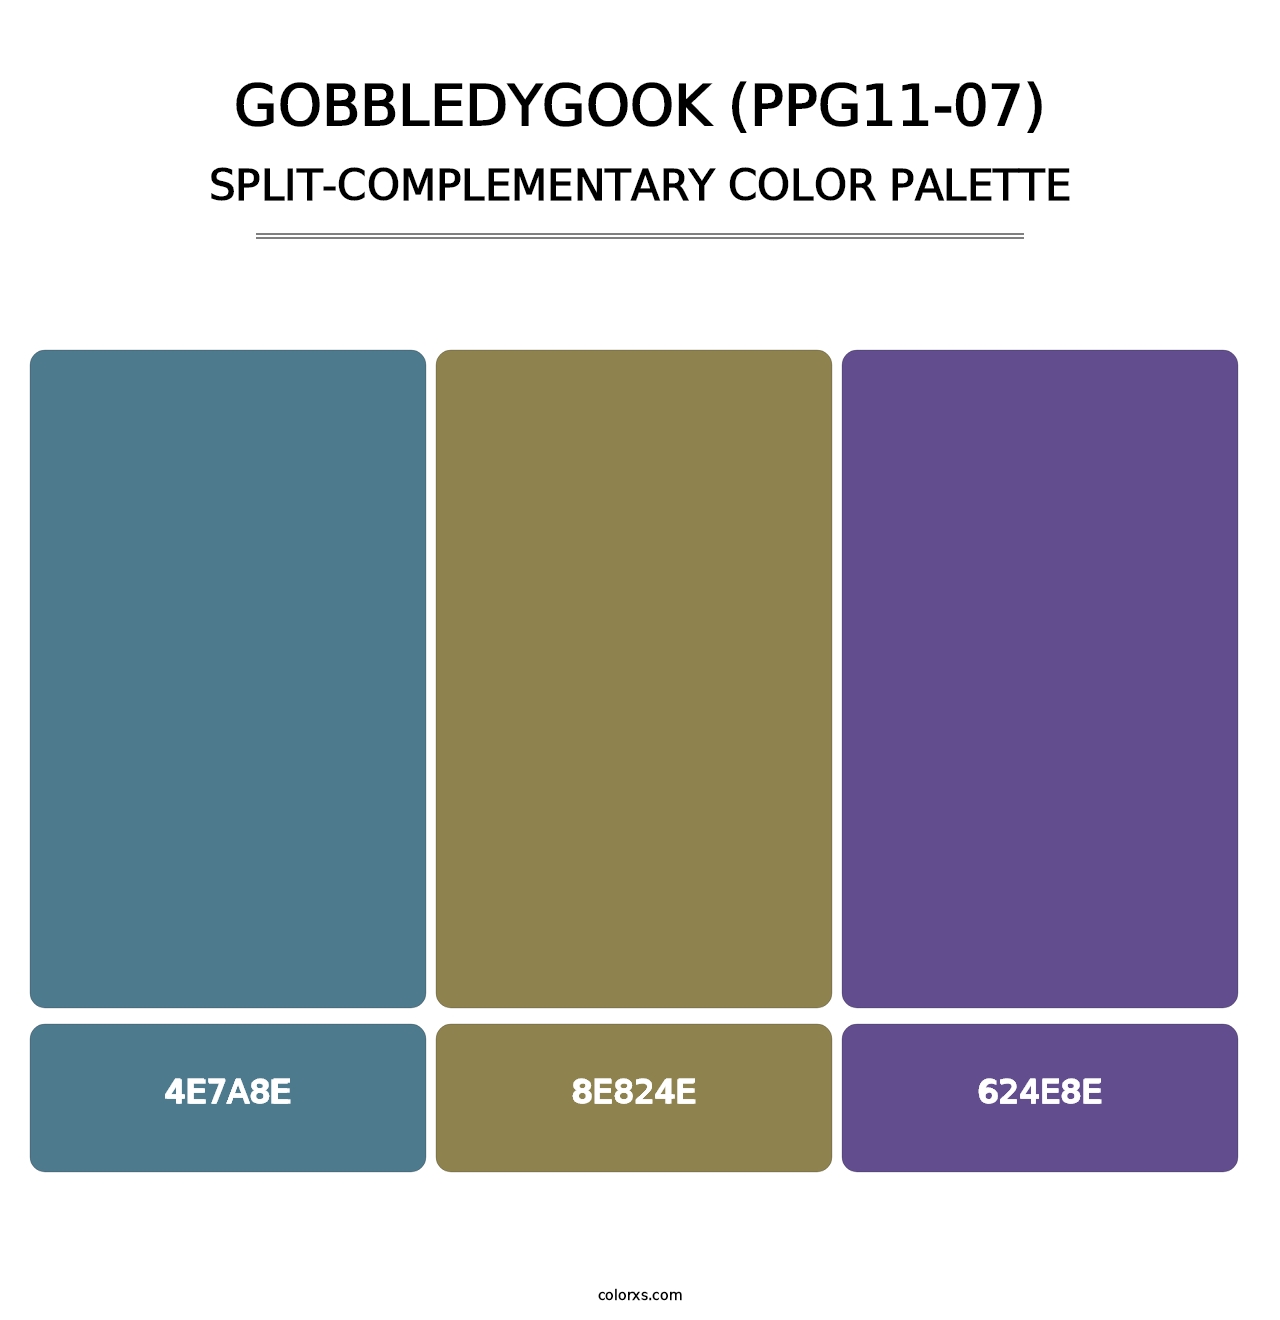 Gobbledygook (PPG11-07) - Split-Complementary Color Palette